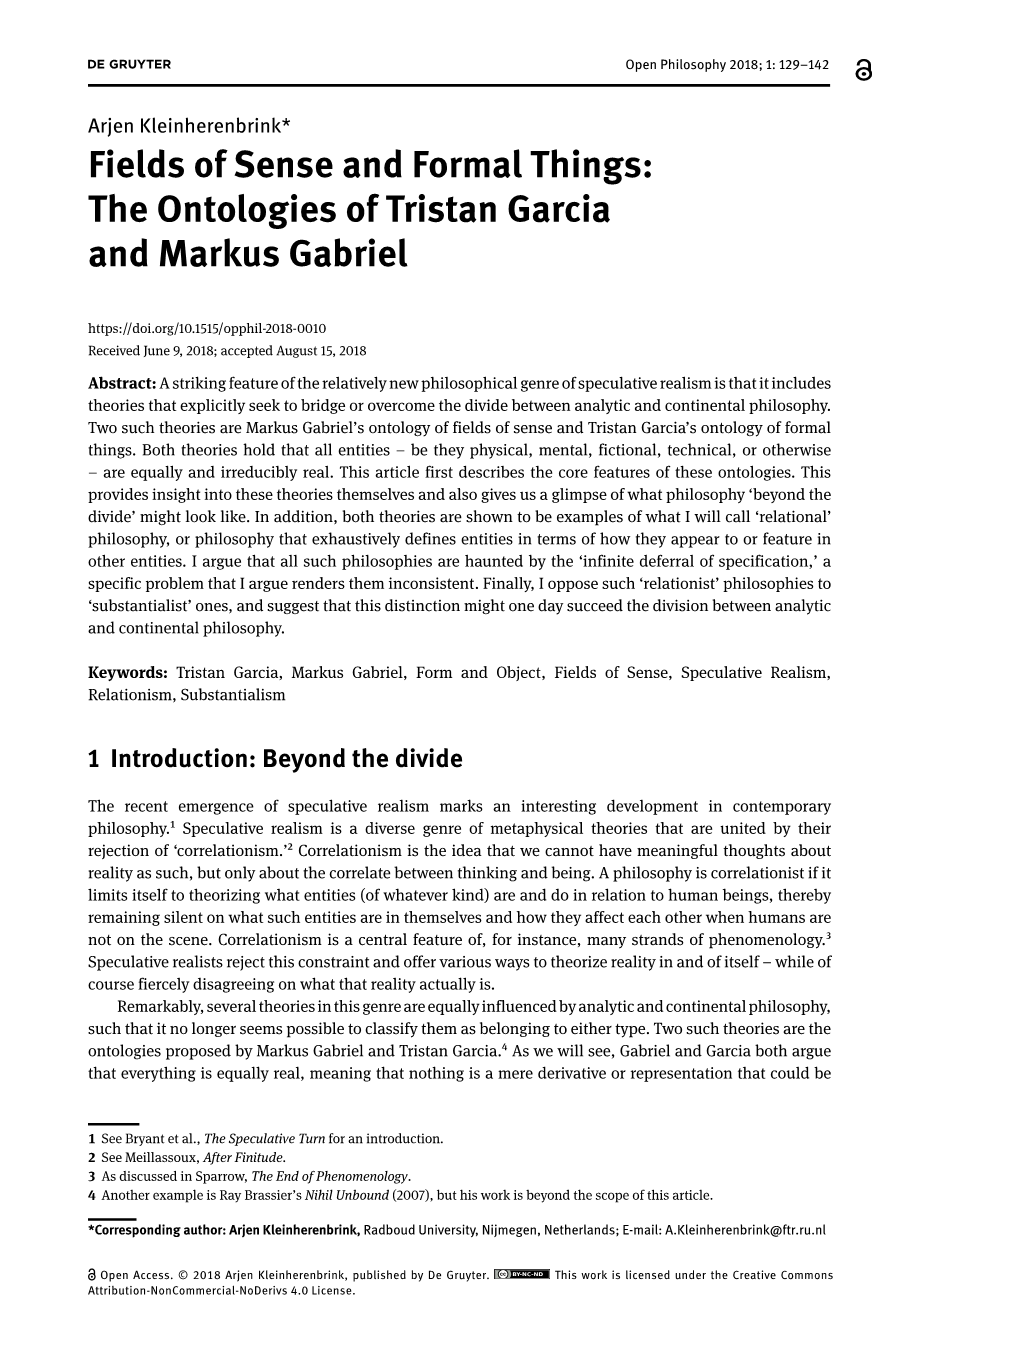 The Ontologies of Tristan Garcia and Markus Gabriel